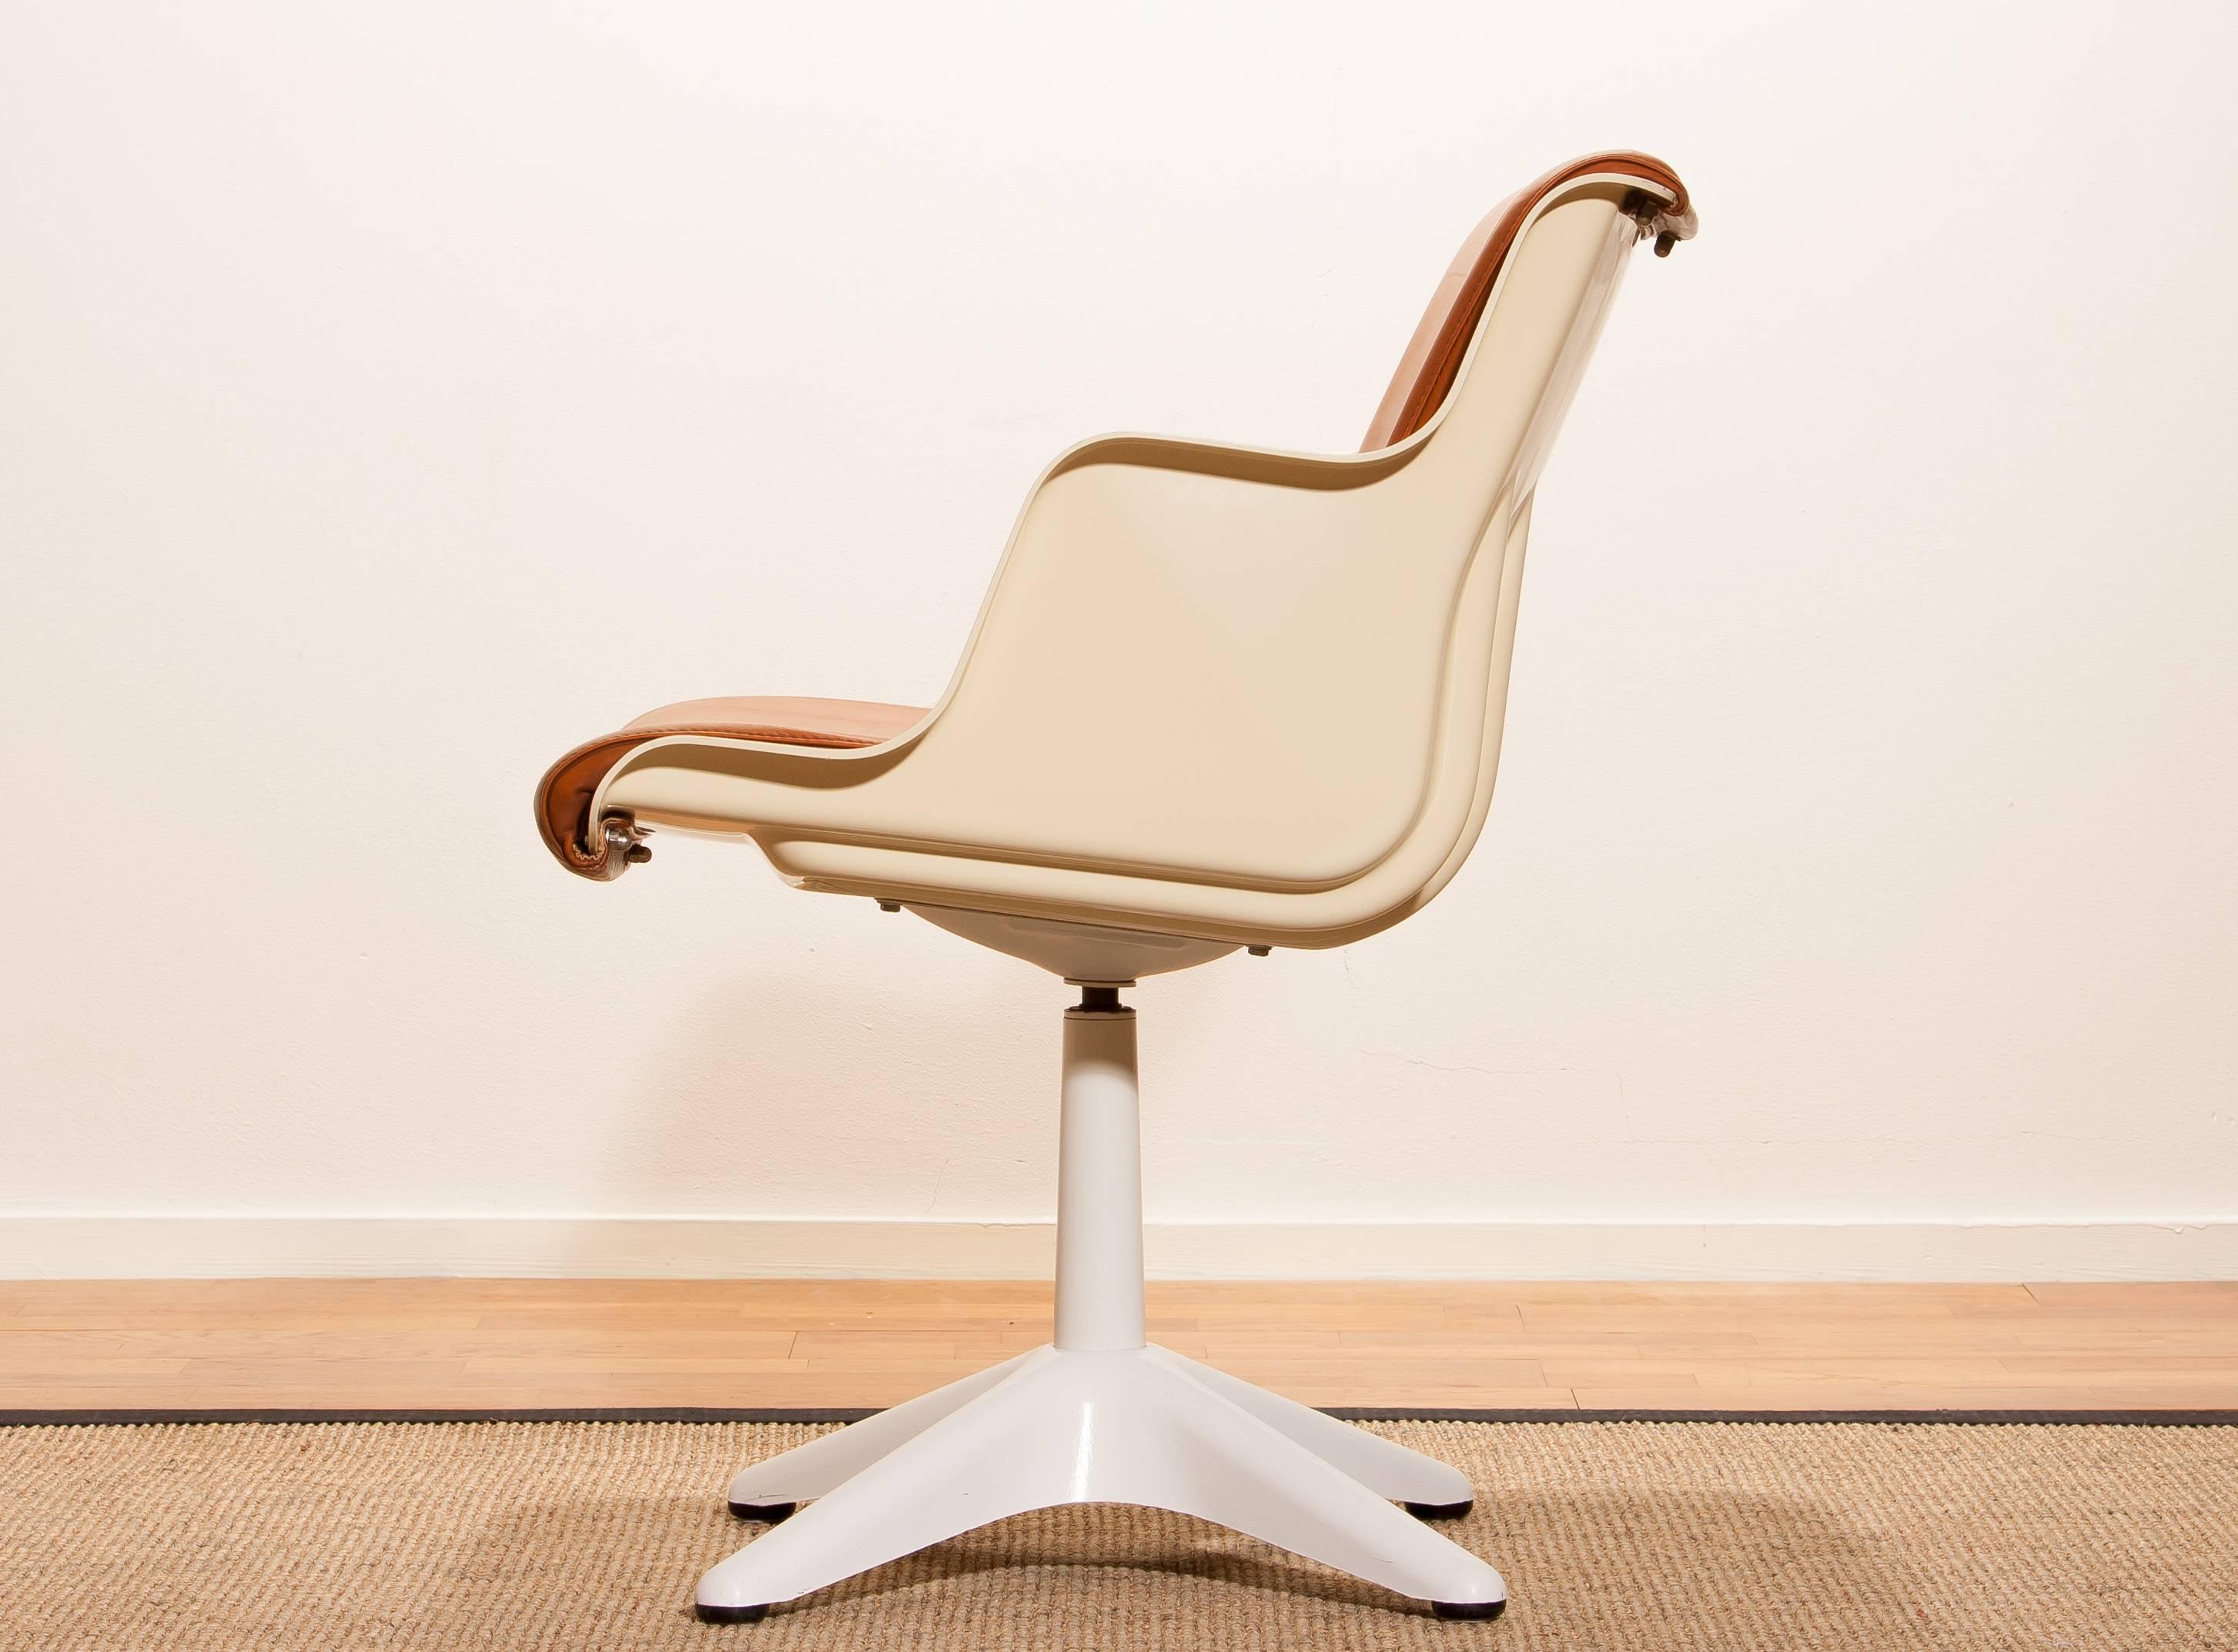 Late 20th Century 1970s, Leather, Fiberglass and Metal Desk Chair by Yrjö Kukkapuro for Haimi